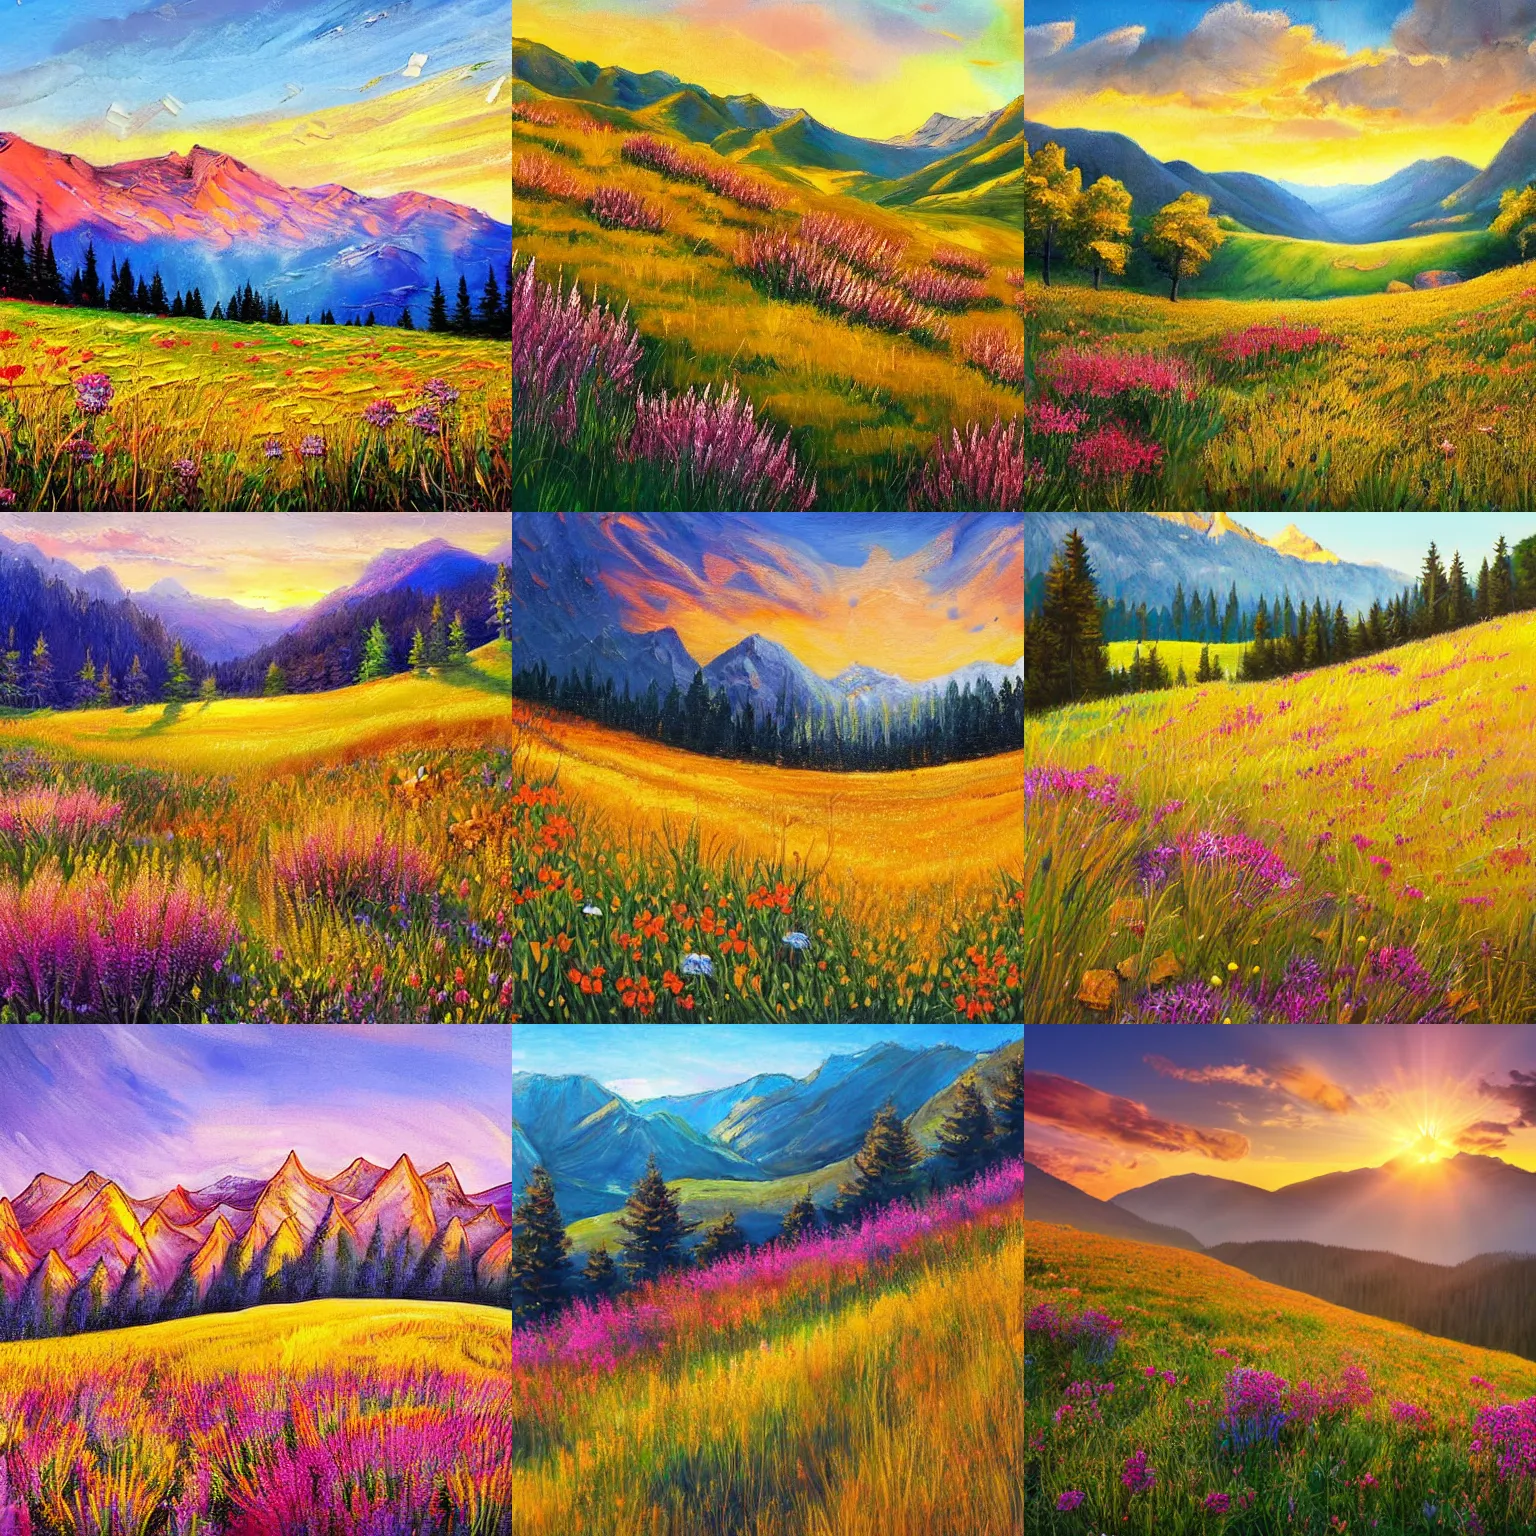 Prompt: beautiful mountainous meadow, meadow full of flowers, beautiful, golden hour, award-winning painting